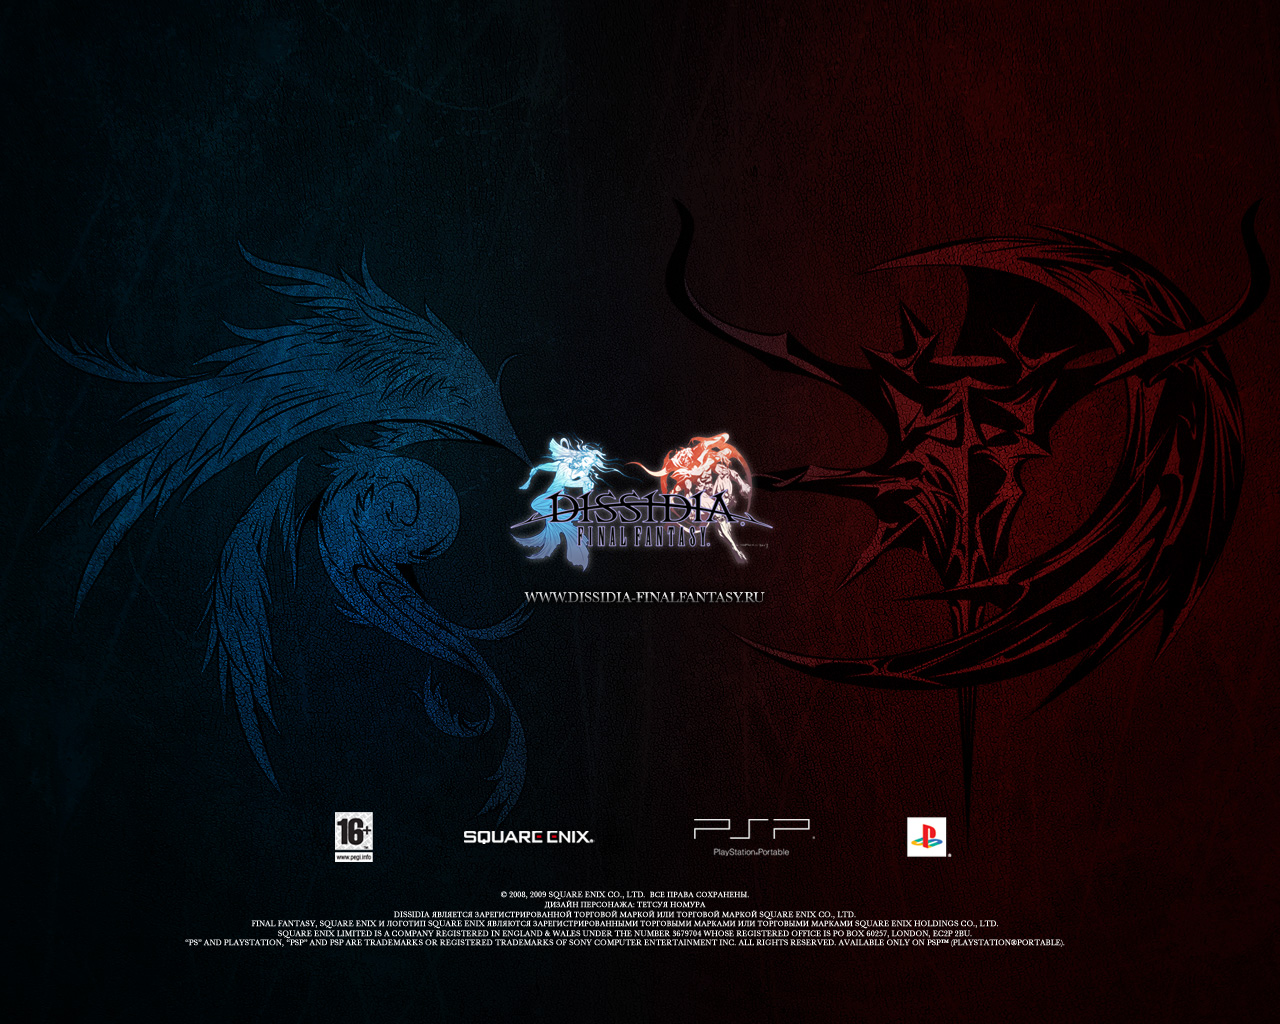 Bilder Final Fantasy Final Fantasy: Dissidia computerspiel Spiele